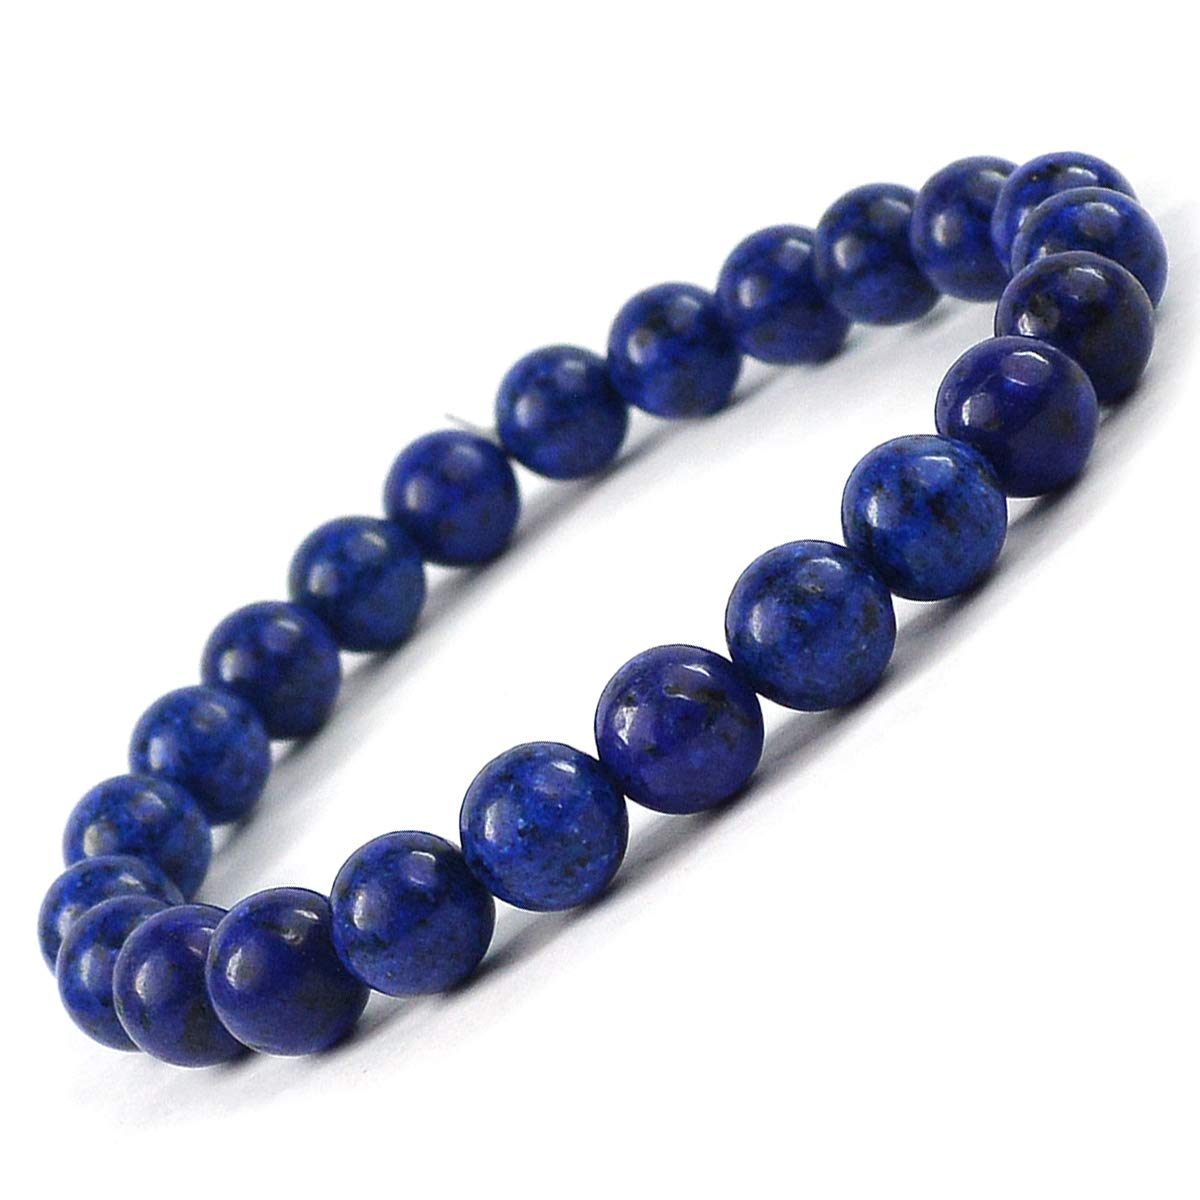 Healing Crystals - Wholesale Lapis Lazuli Crystal Stone Bracelet